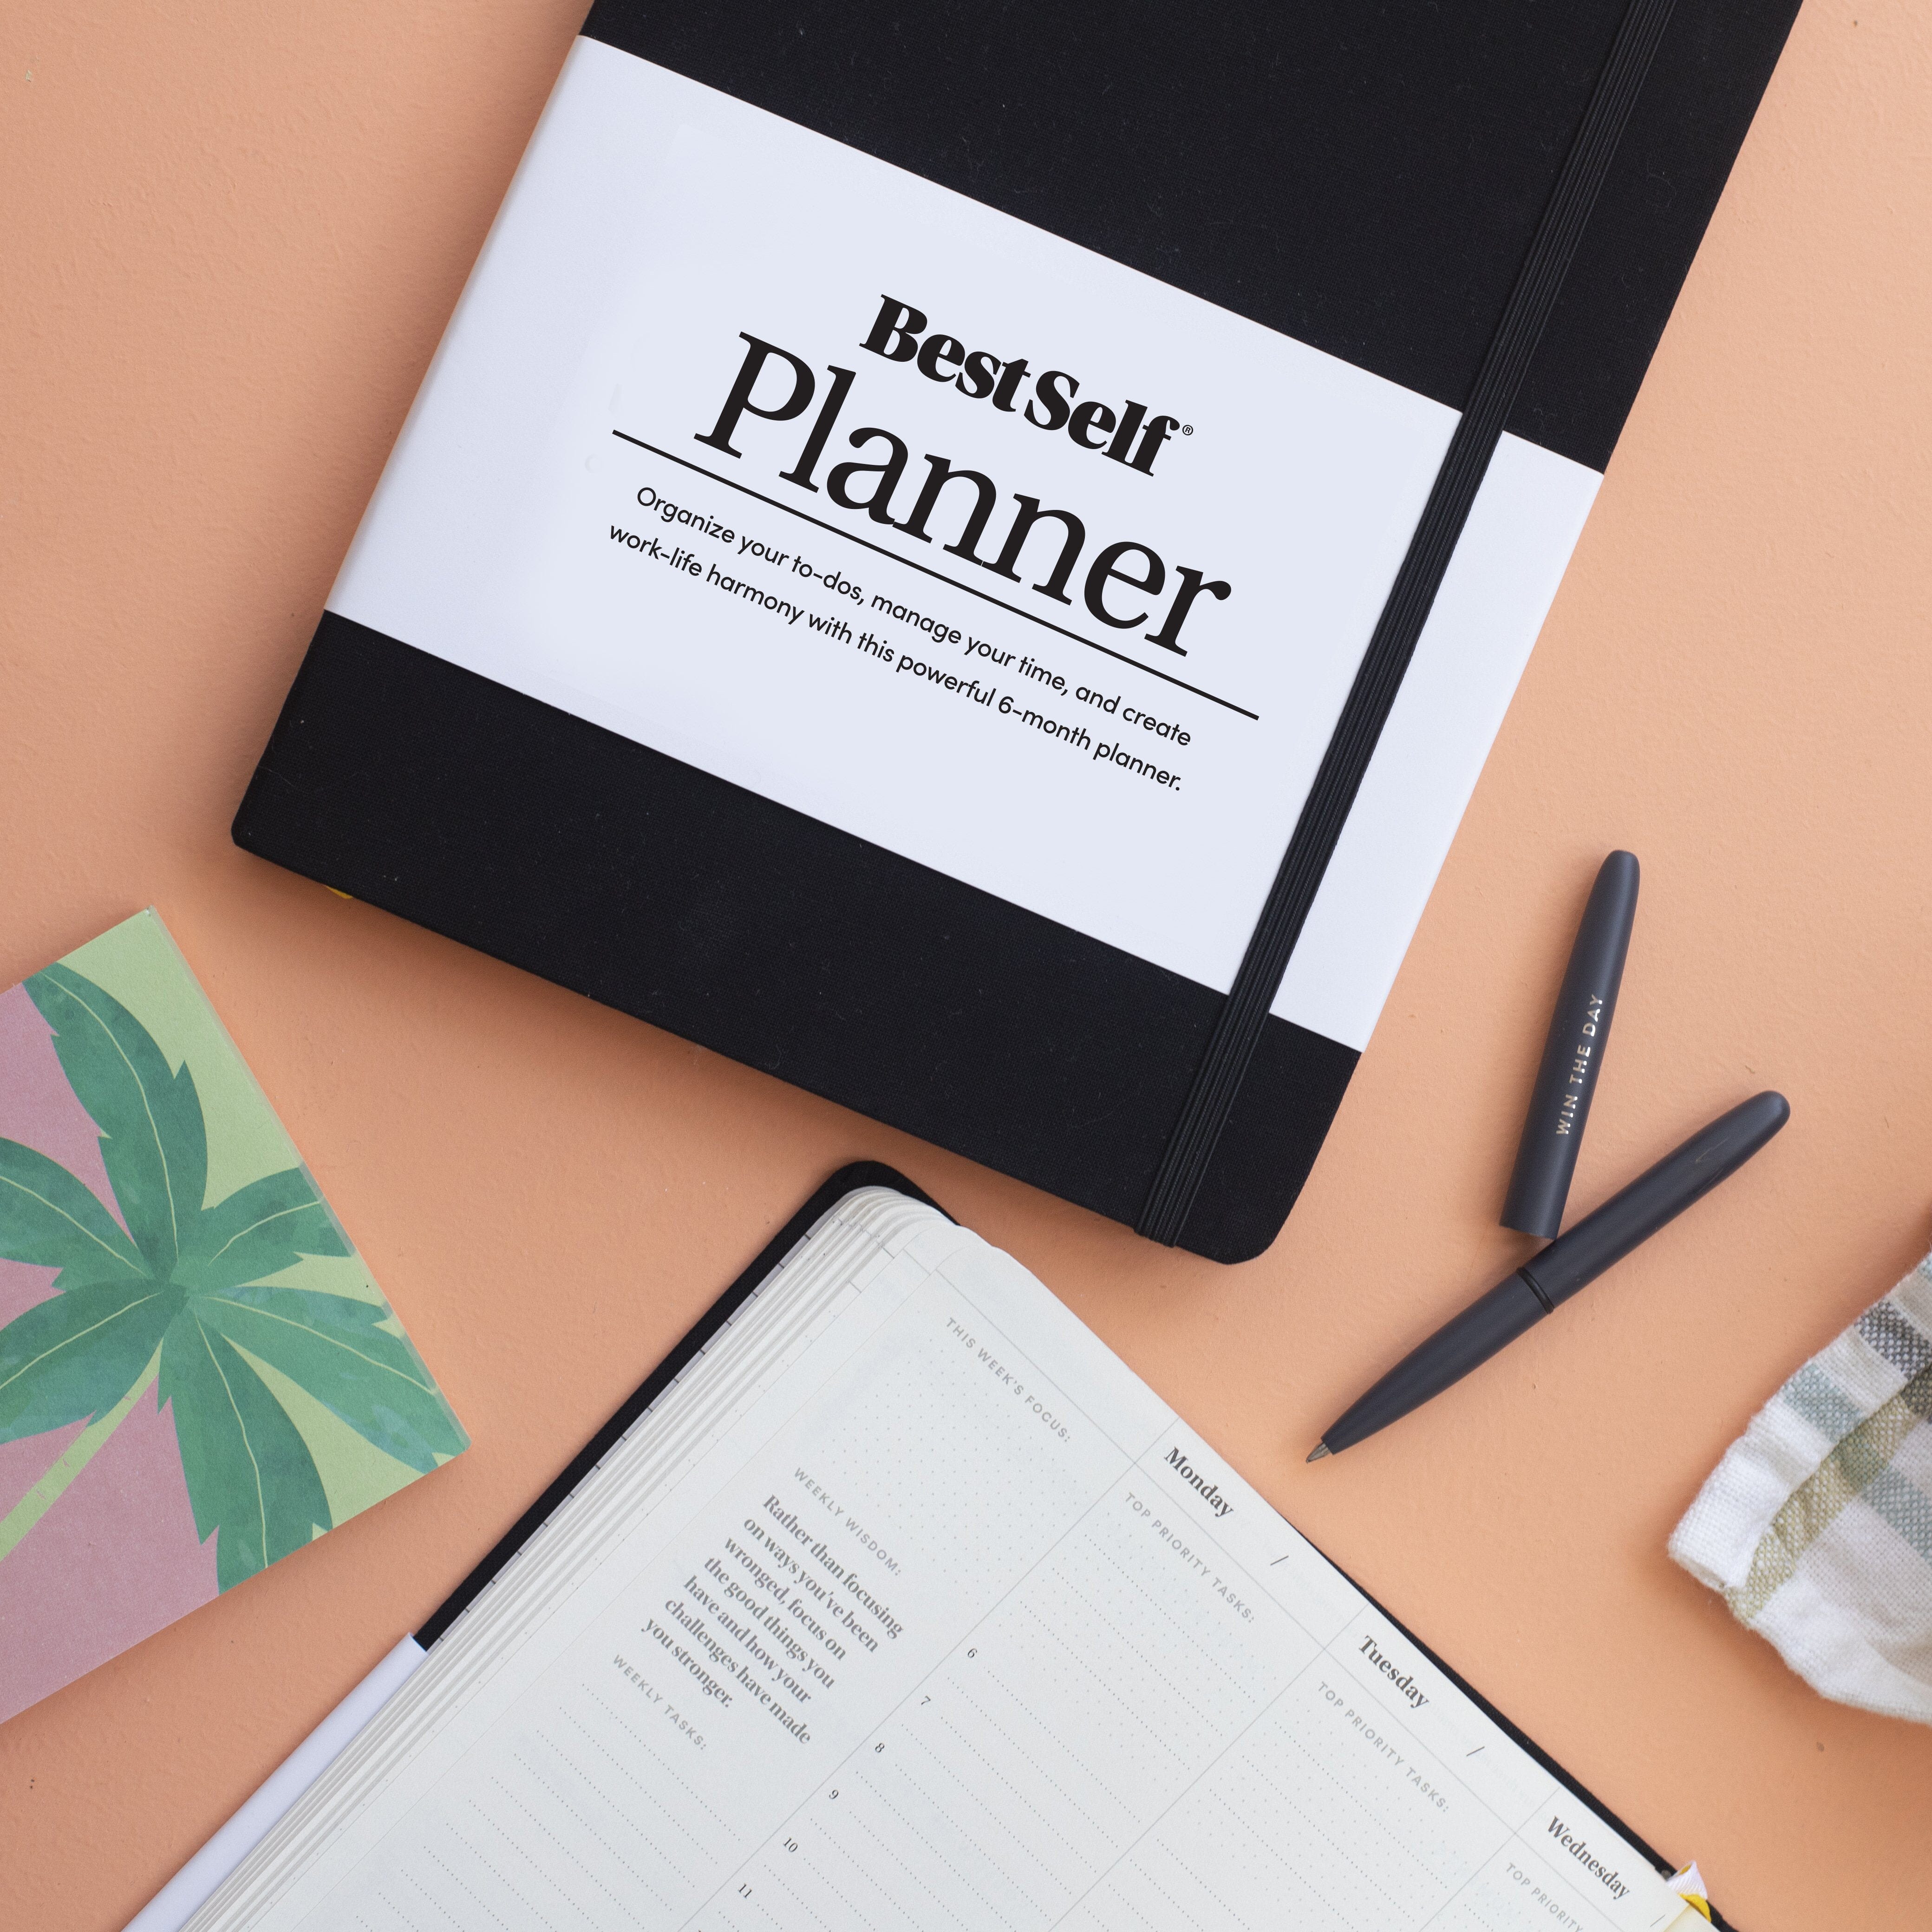 BestSelf Planner Journal Personal Growth